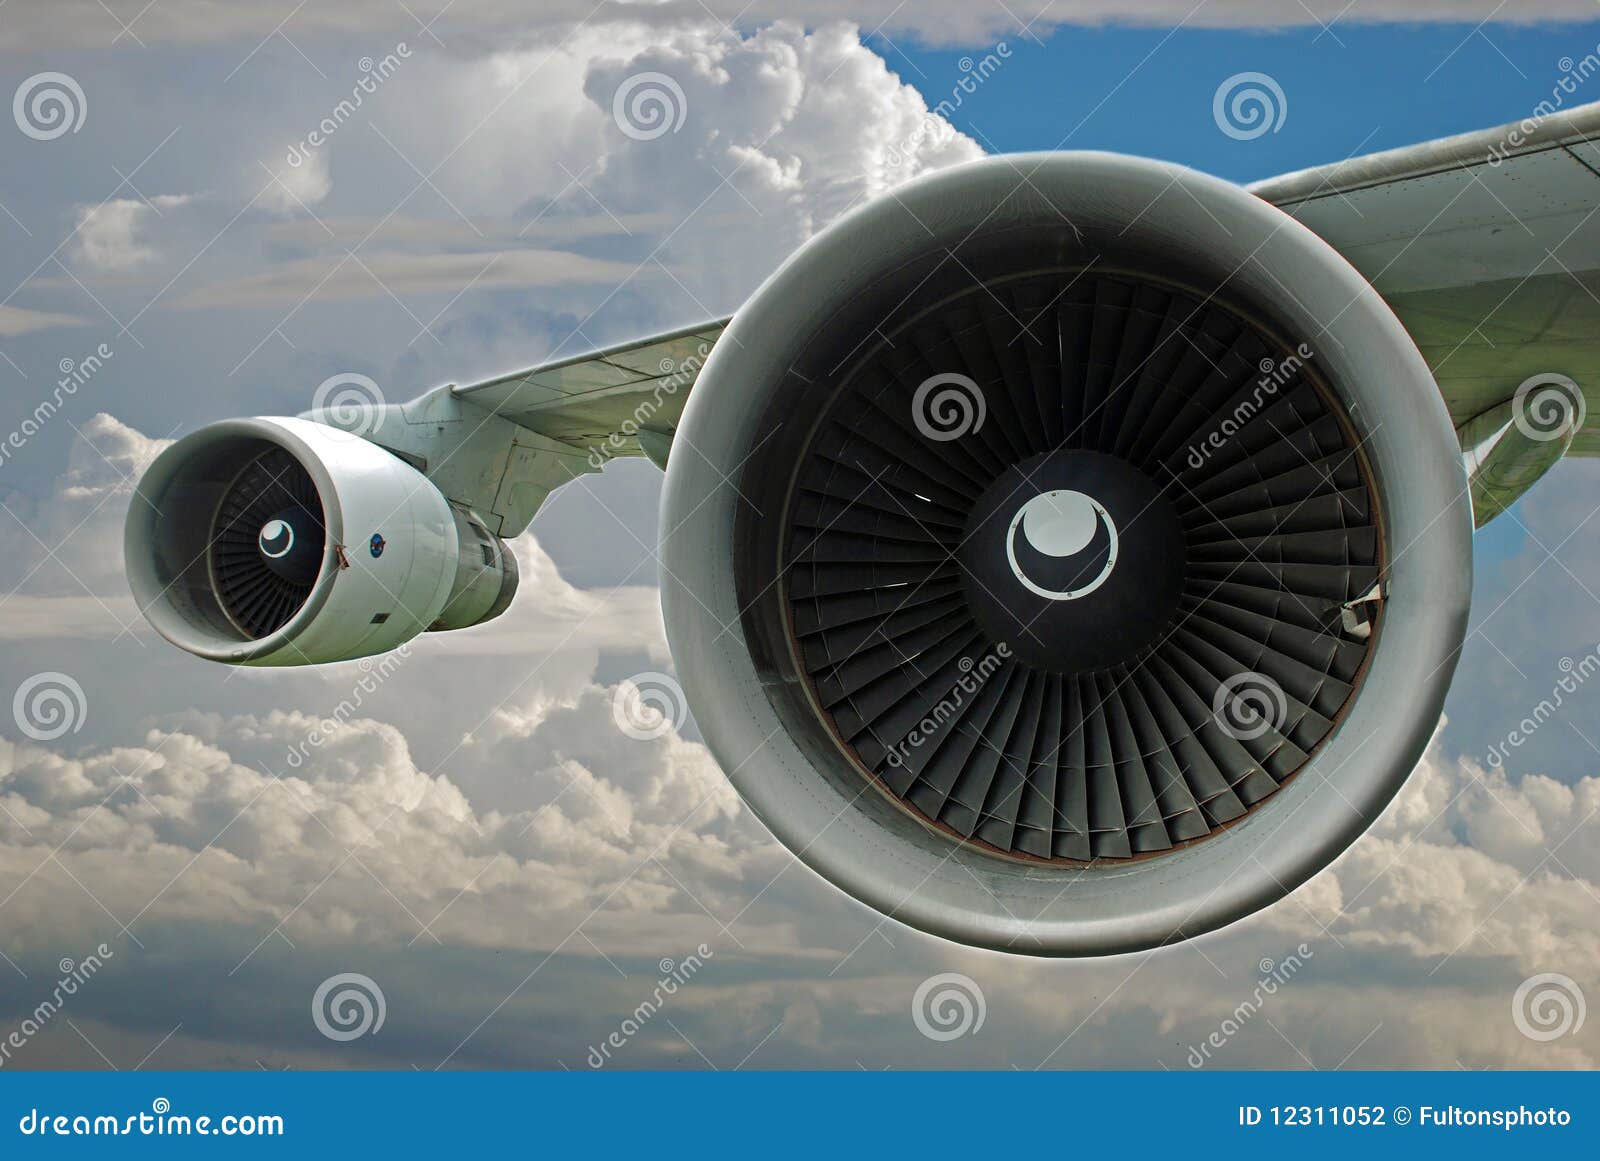 supersonic jet engines